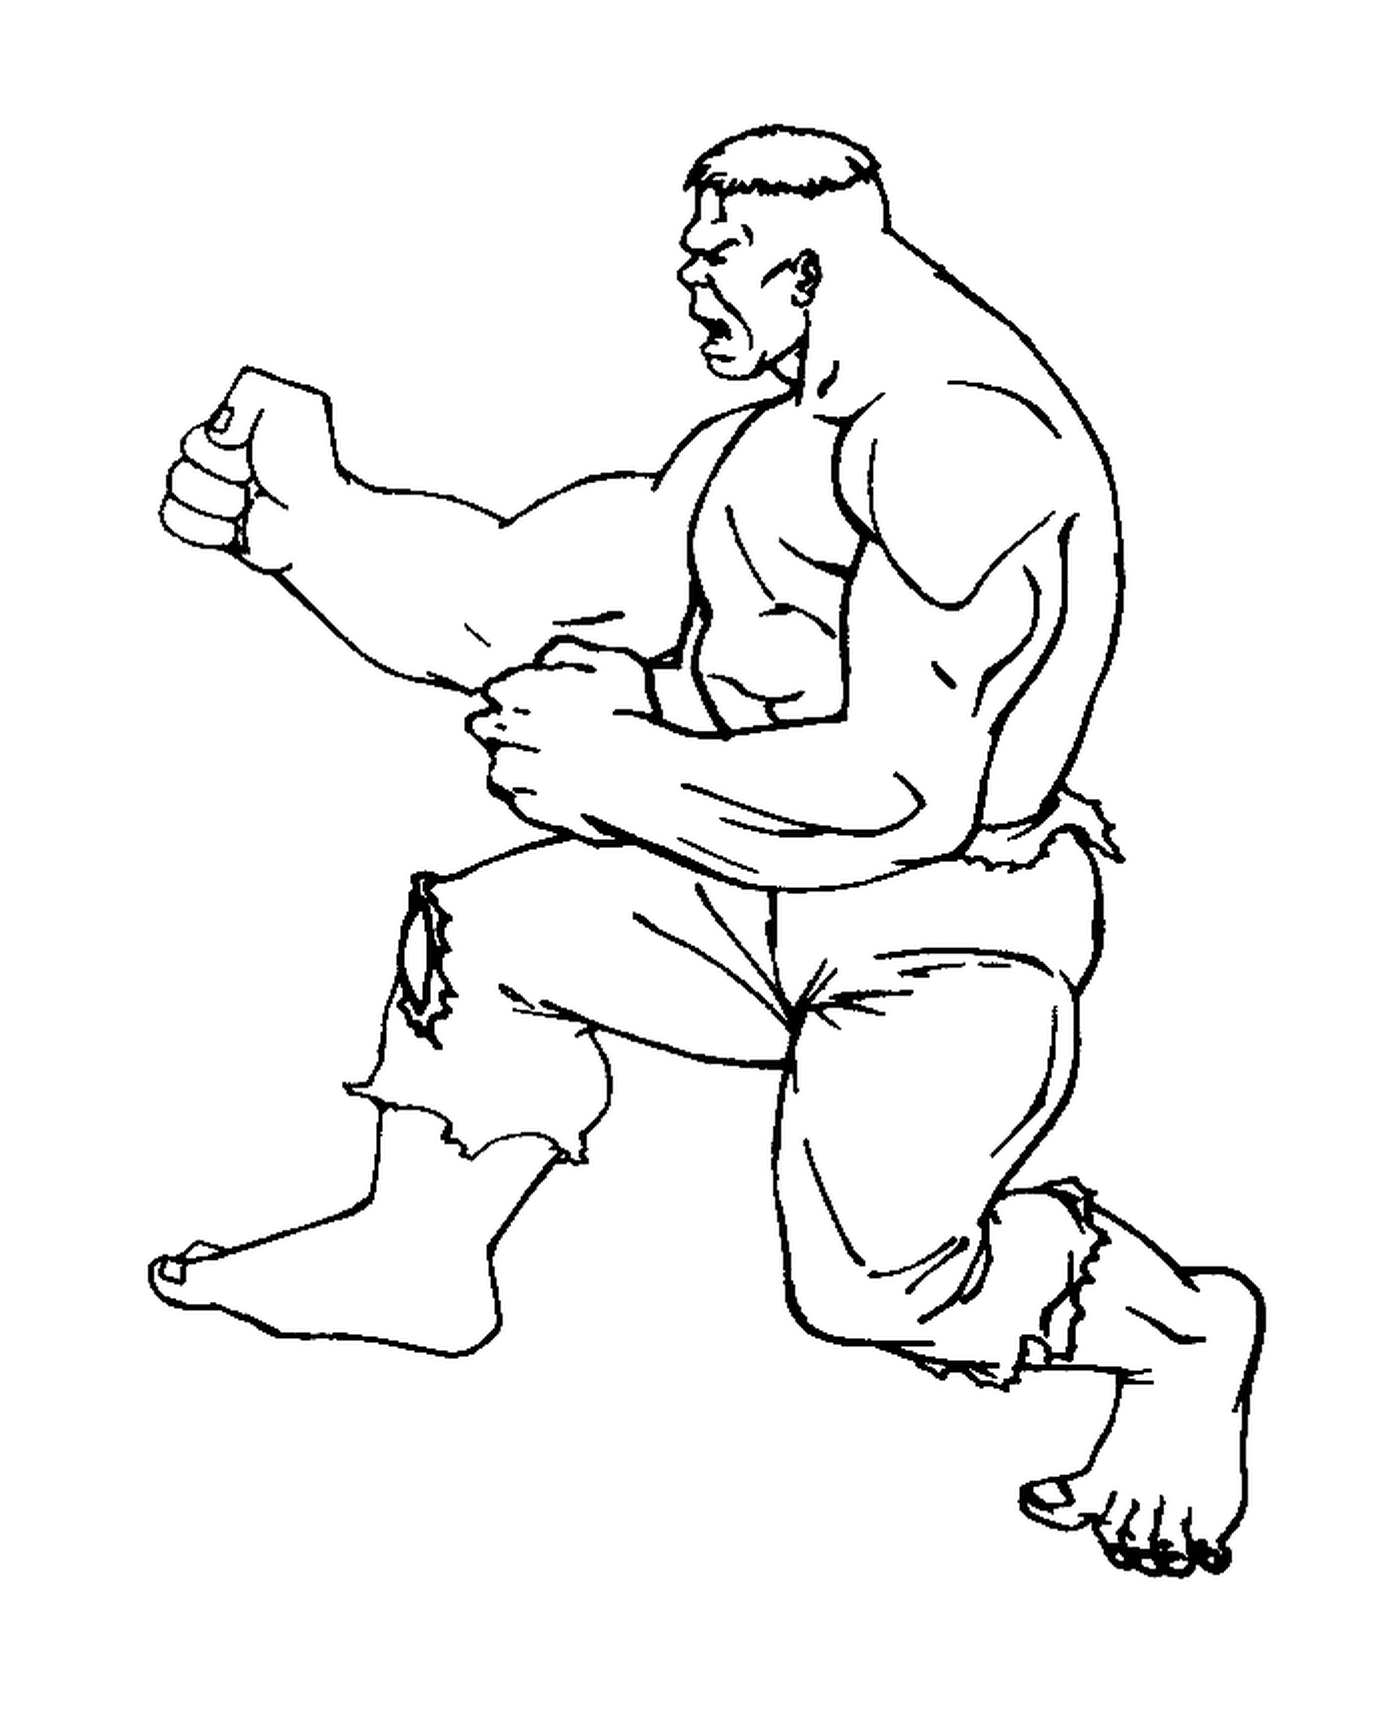  Hulk practicando karate 